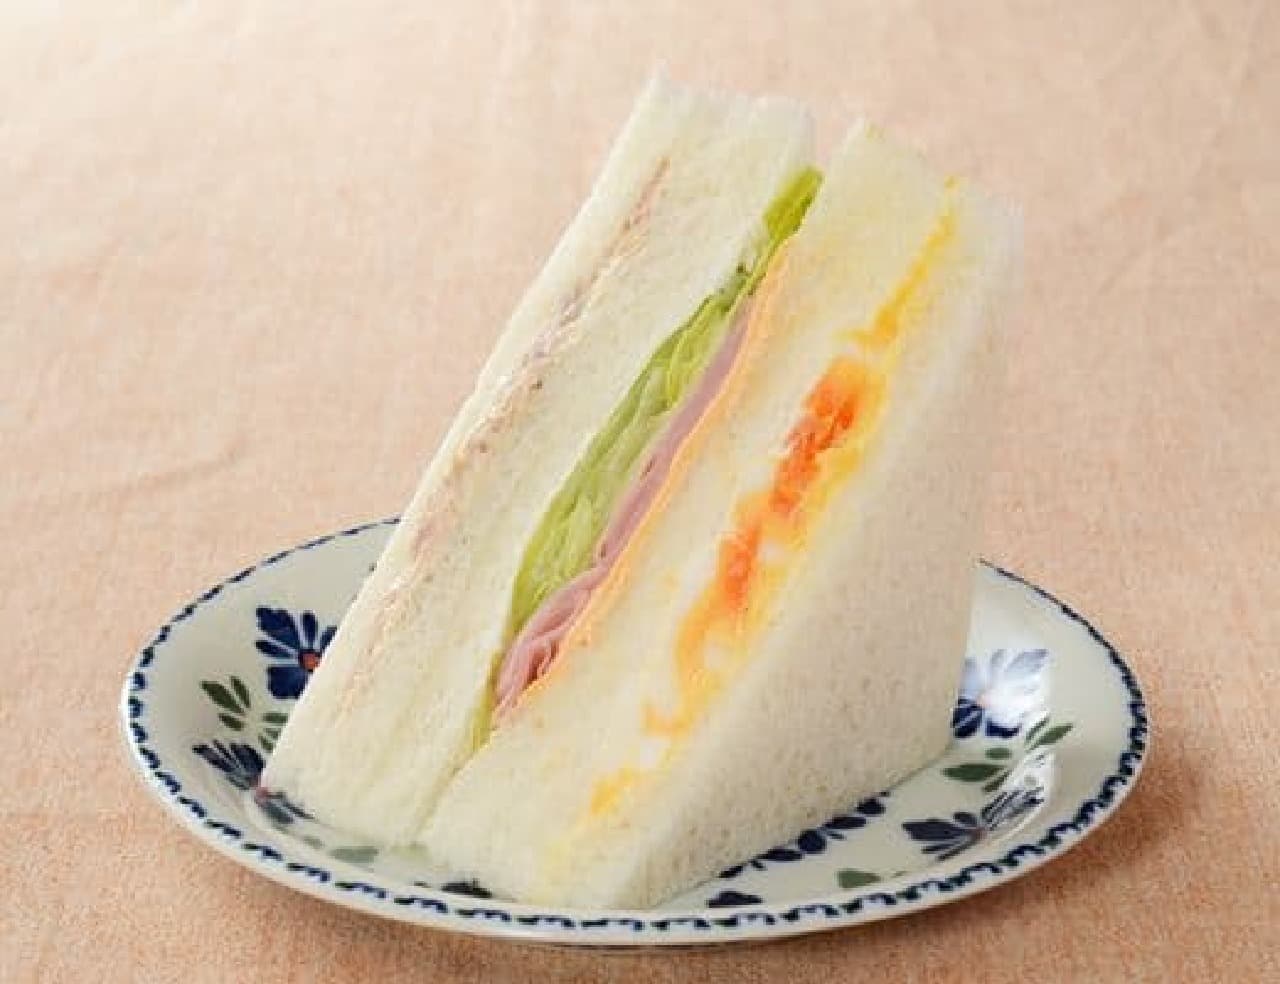 Lawson "Mixed Sandwich